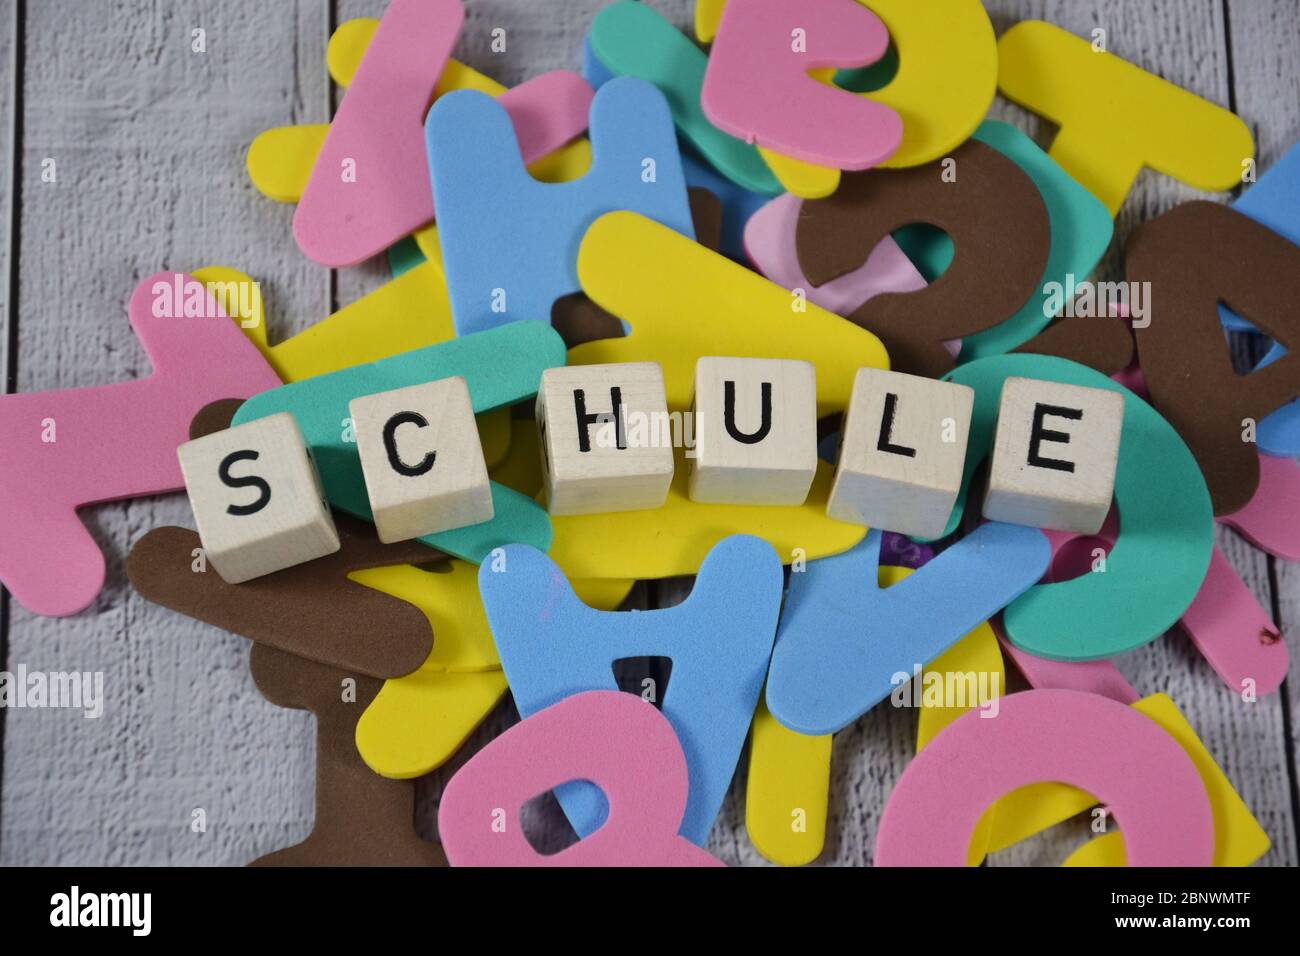 Schule - the german word for school Stock Photo